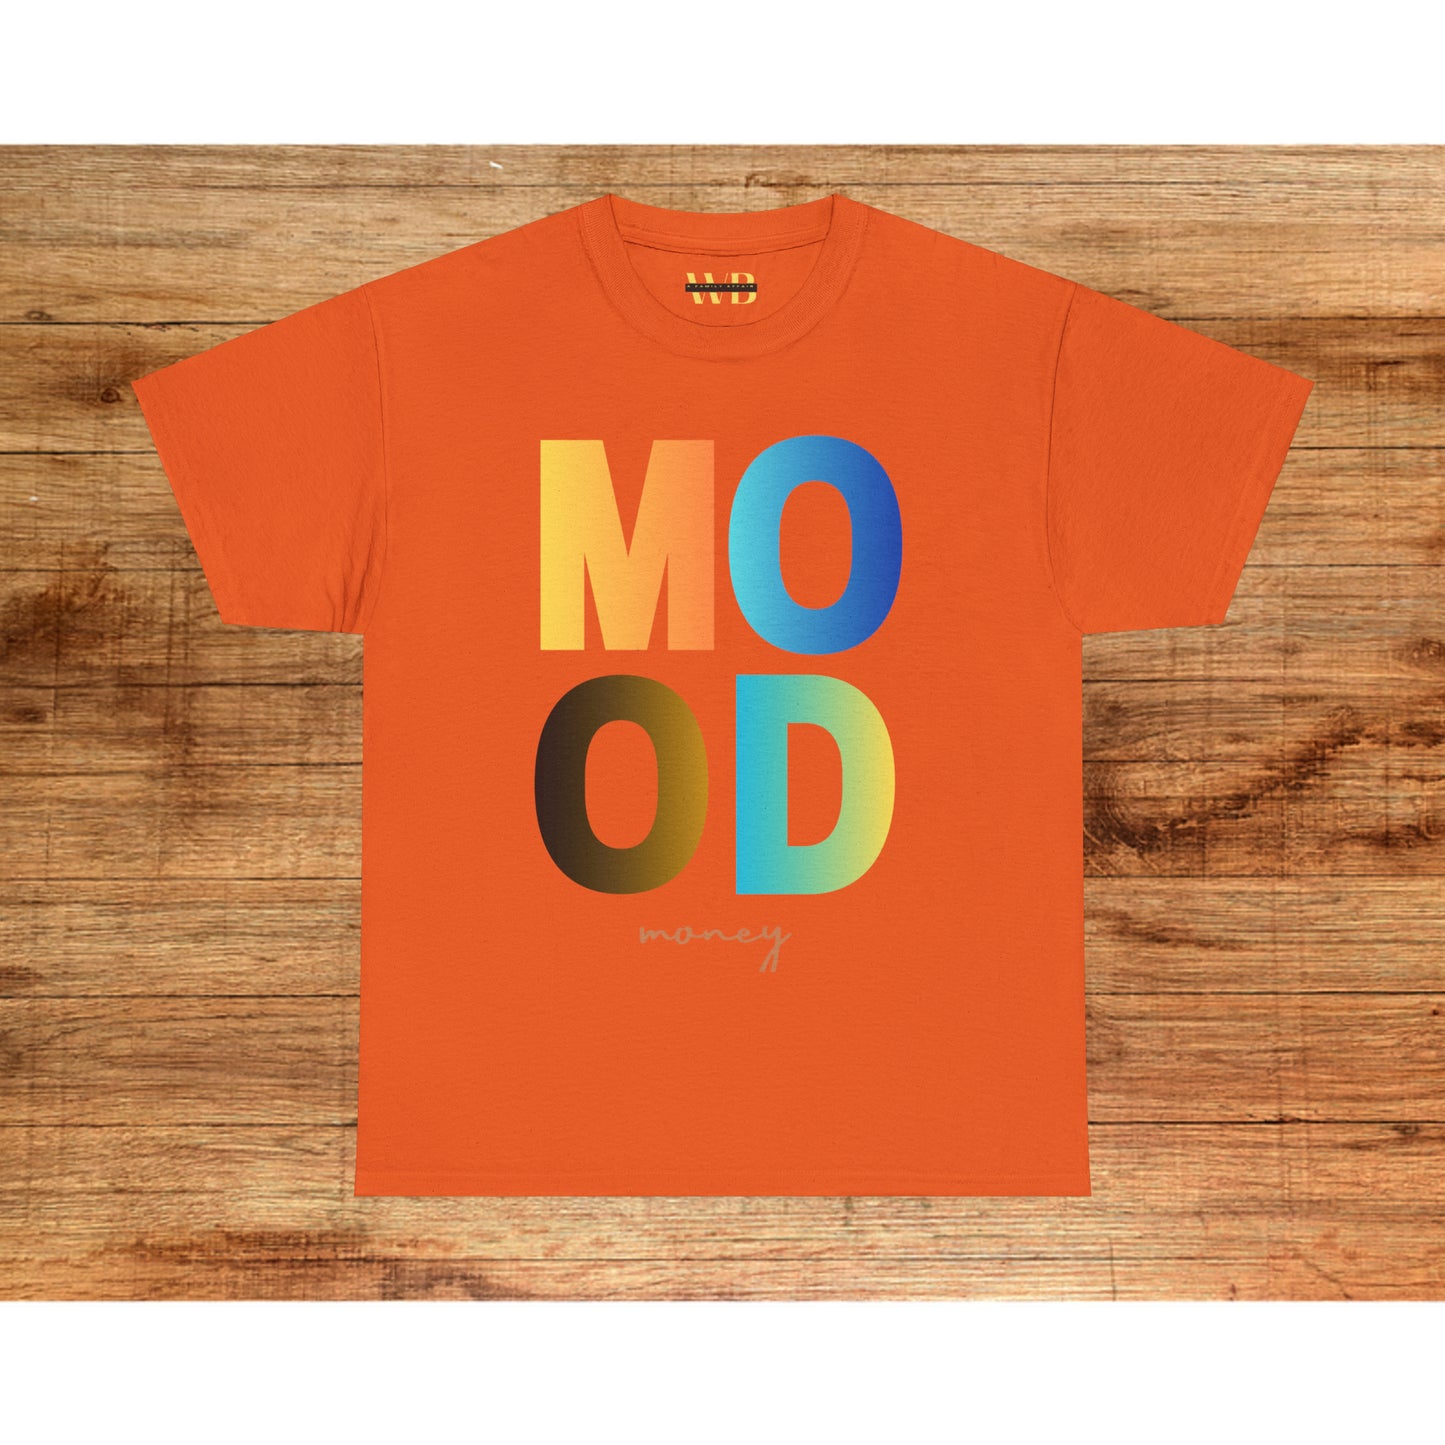 Mood And Money T-shirt